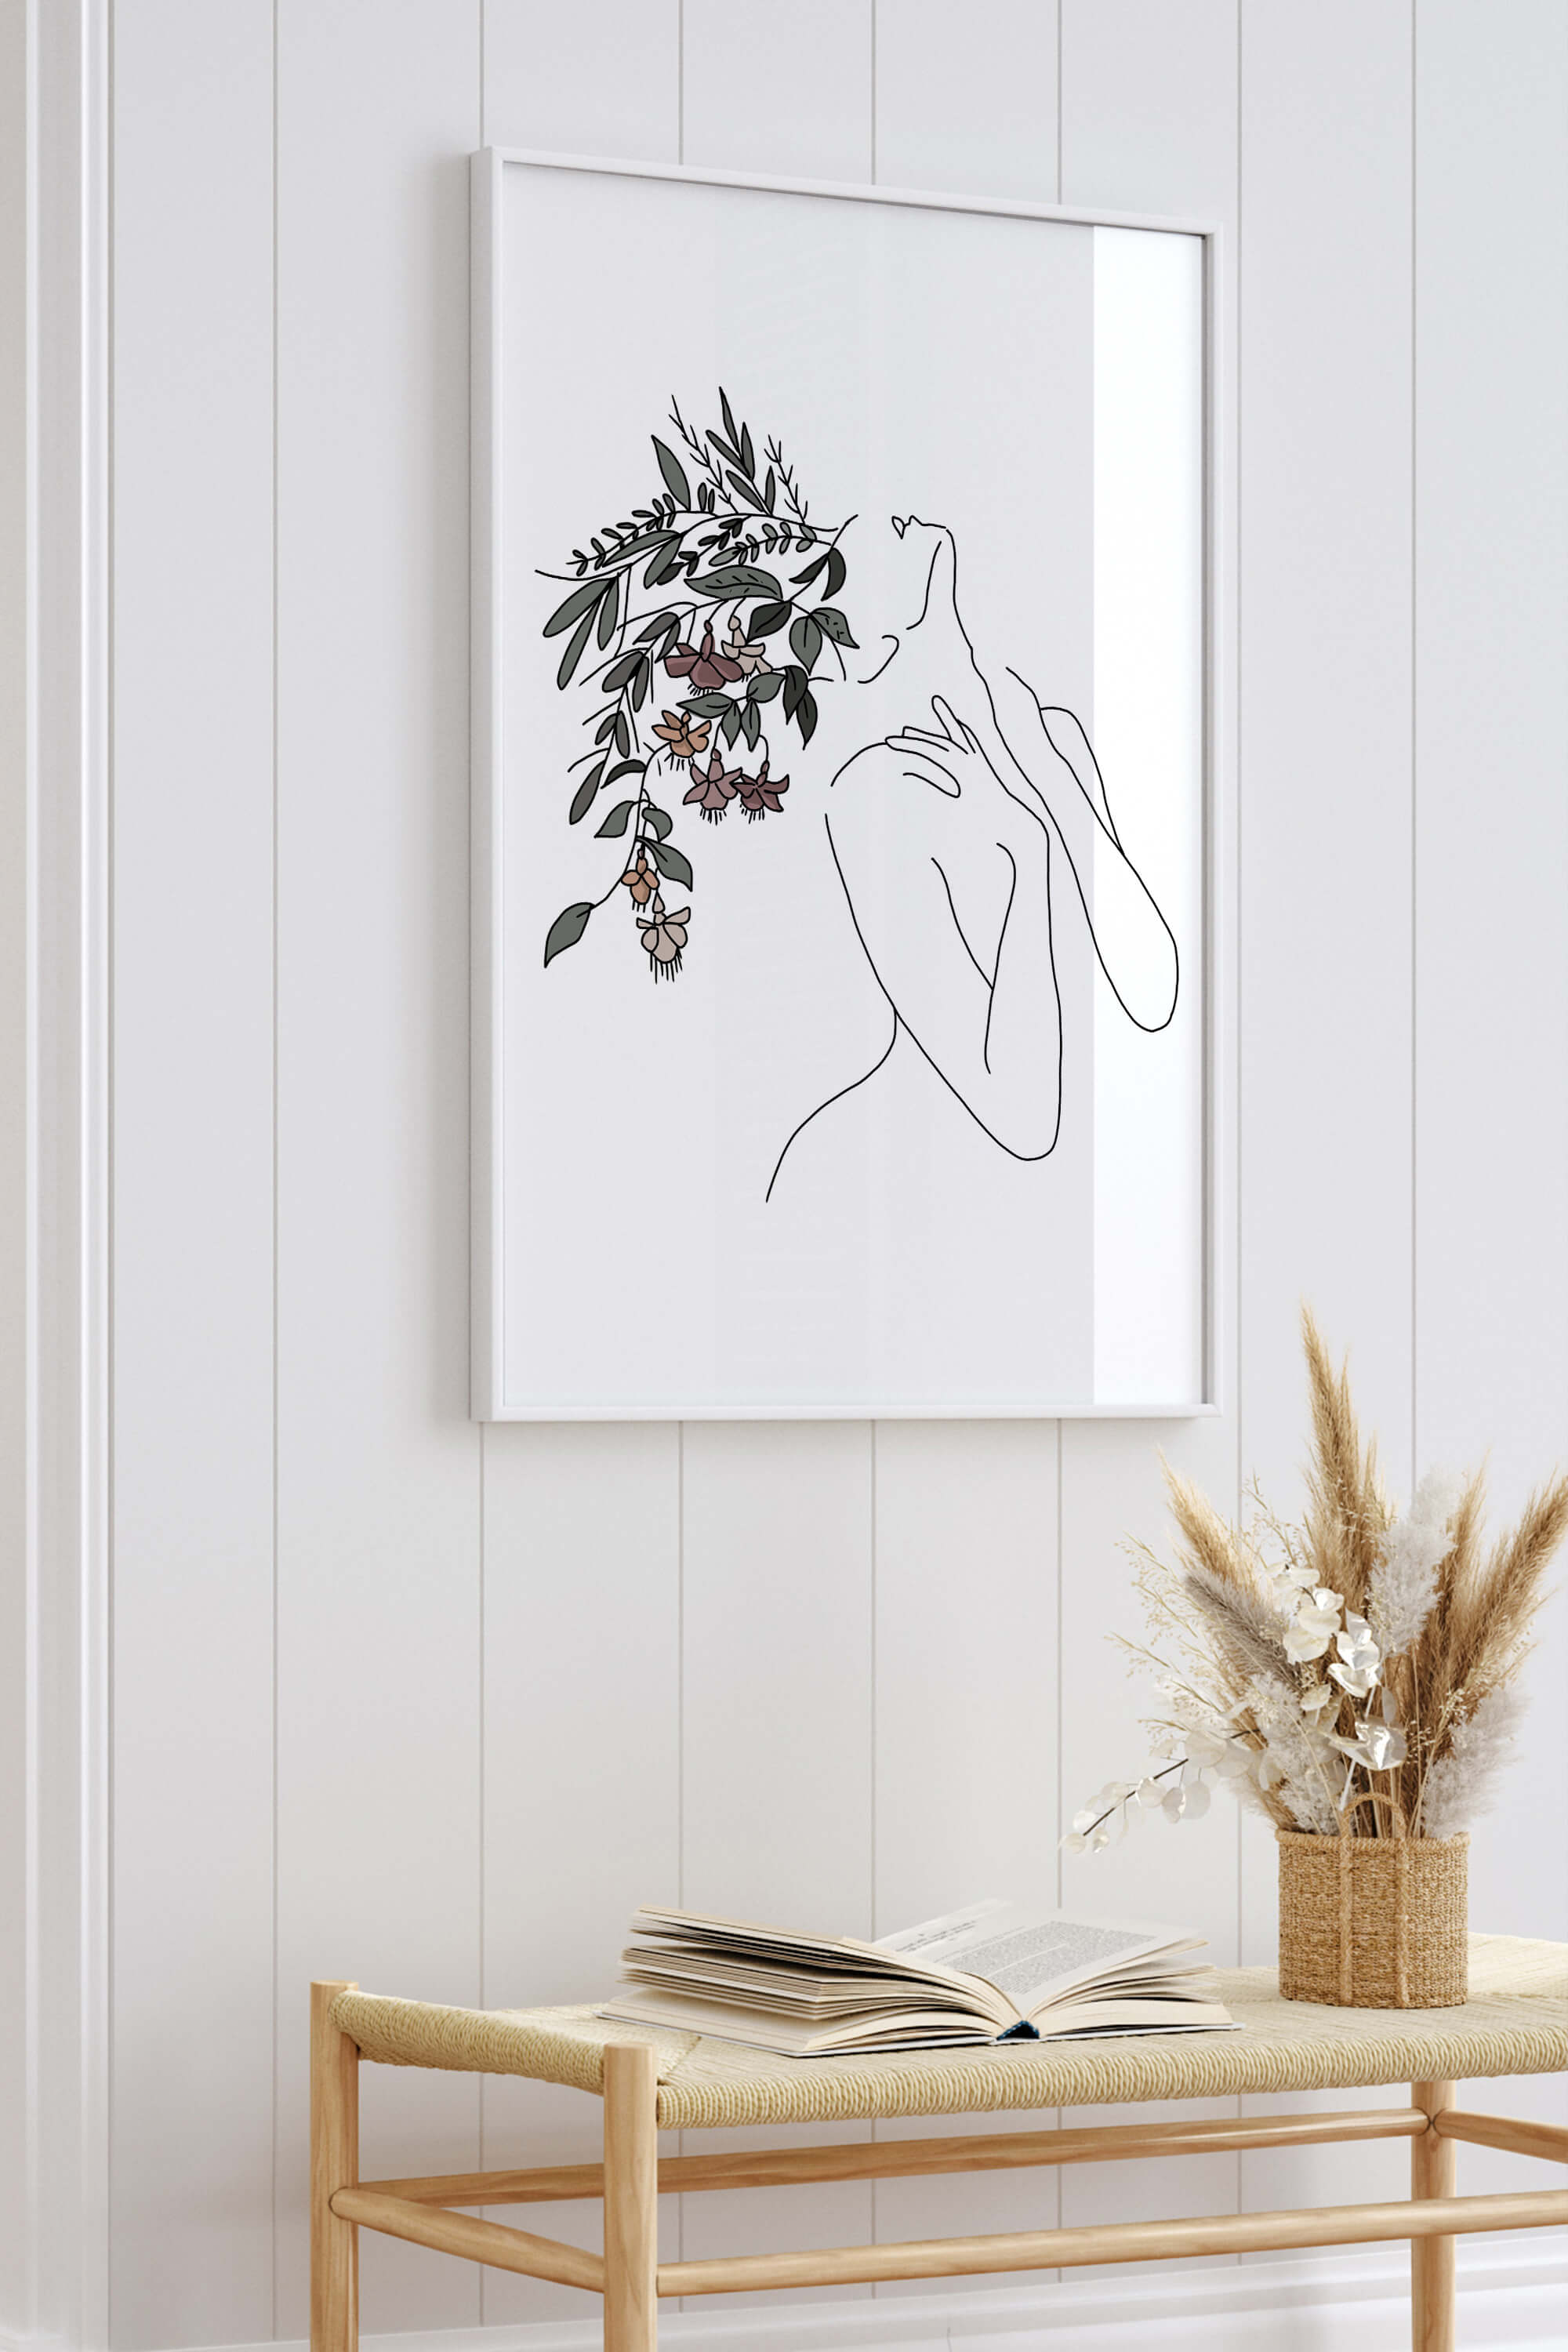 Woman with Flowers Line Art Drawing. Female Figure Minimalist